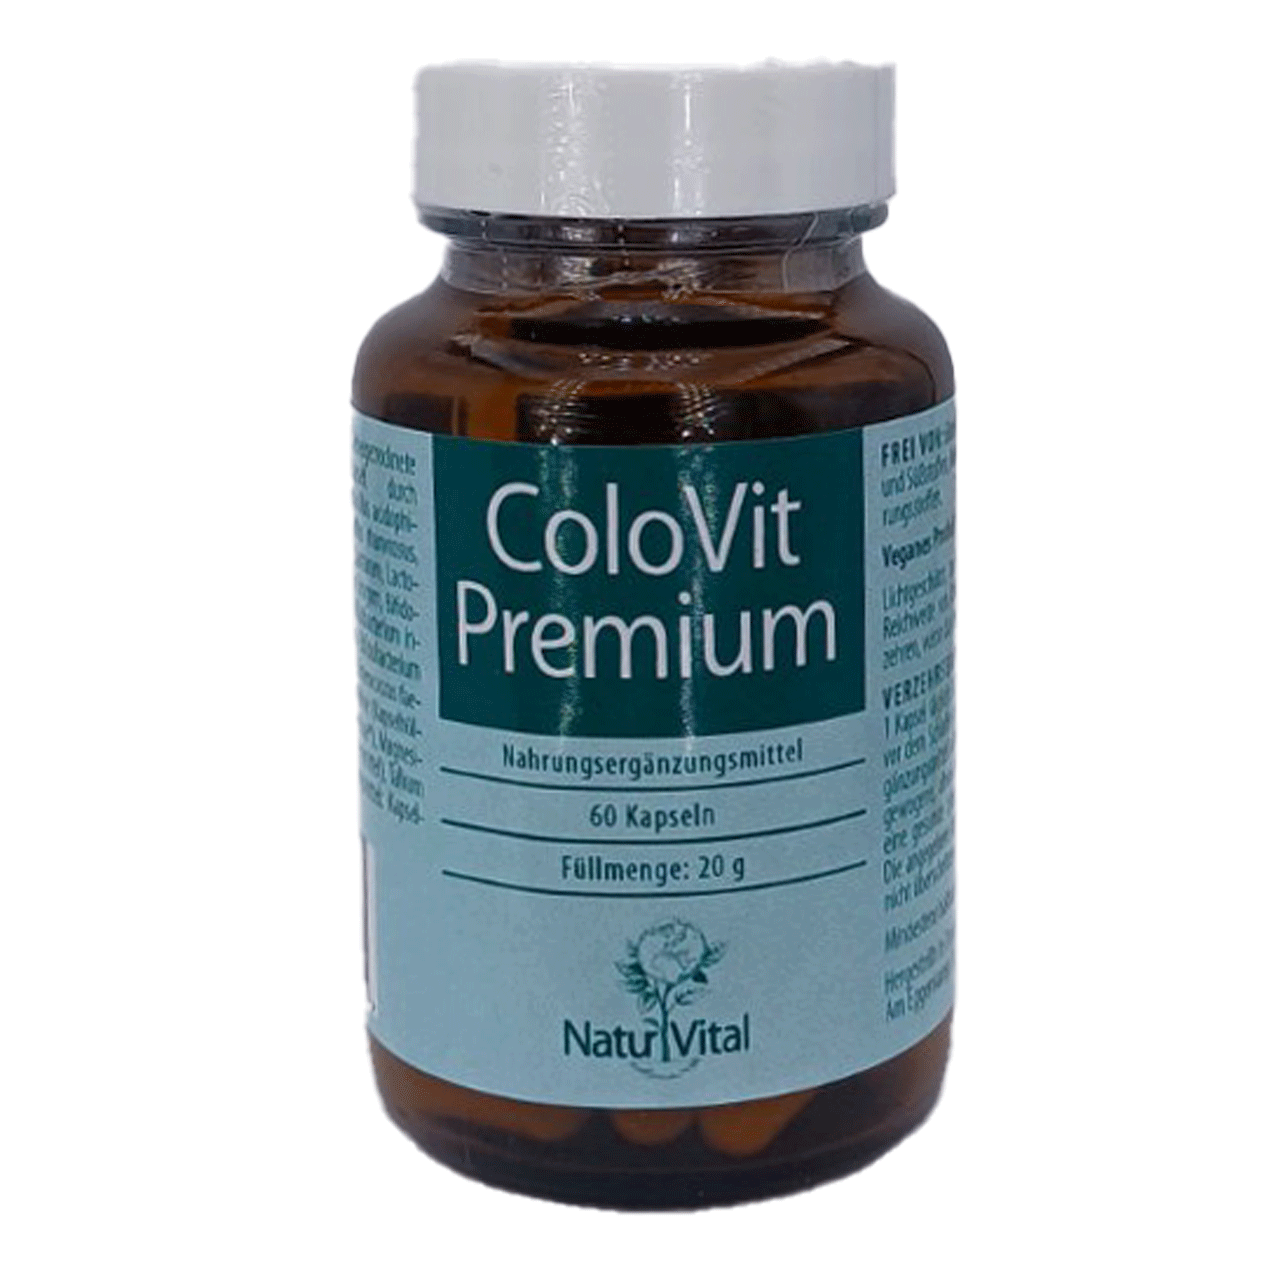 Colovit Premium, 60 Kapseln